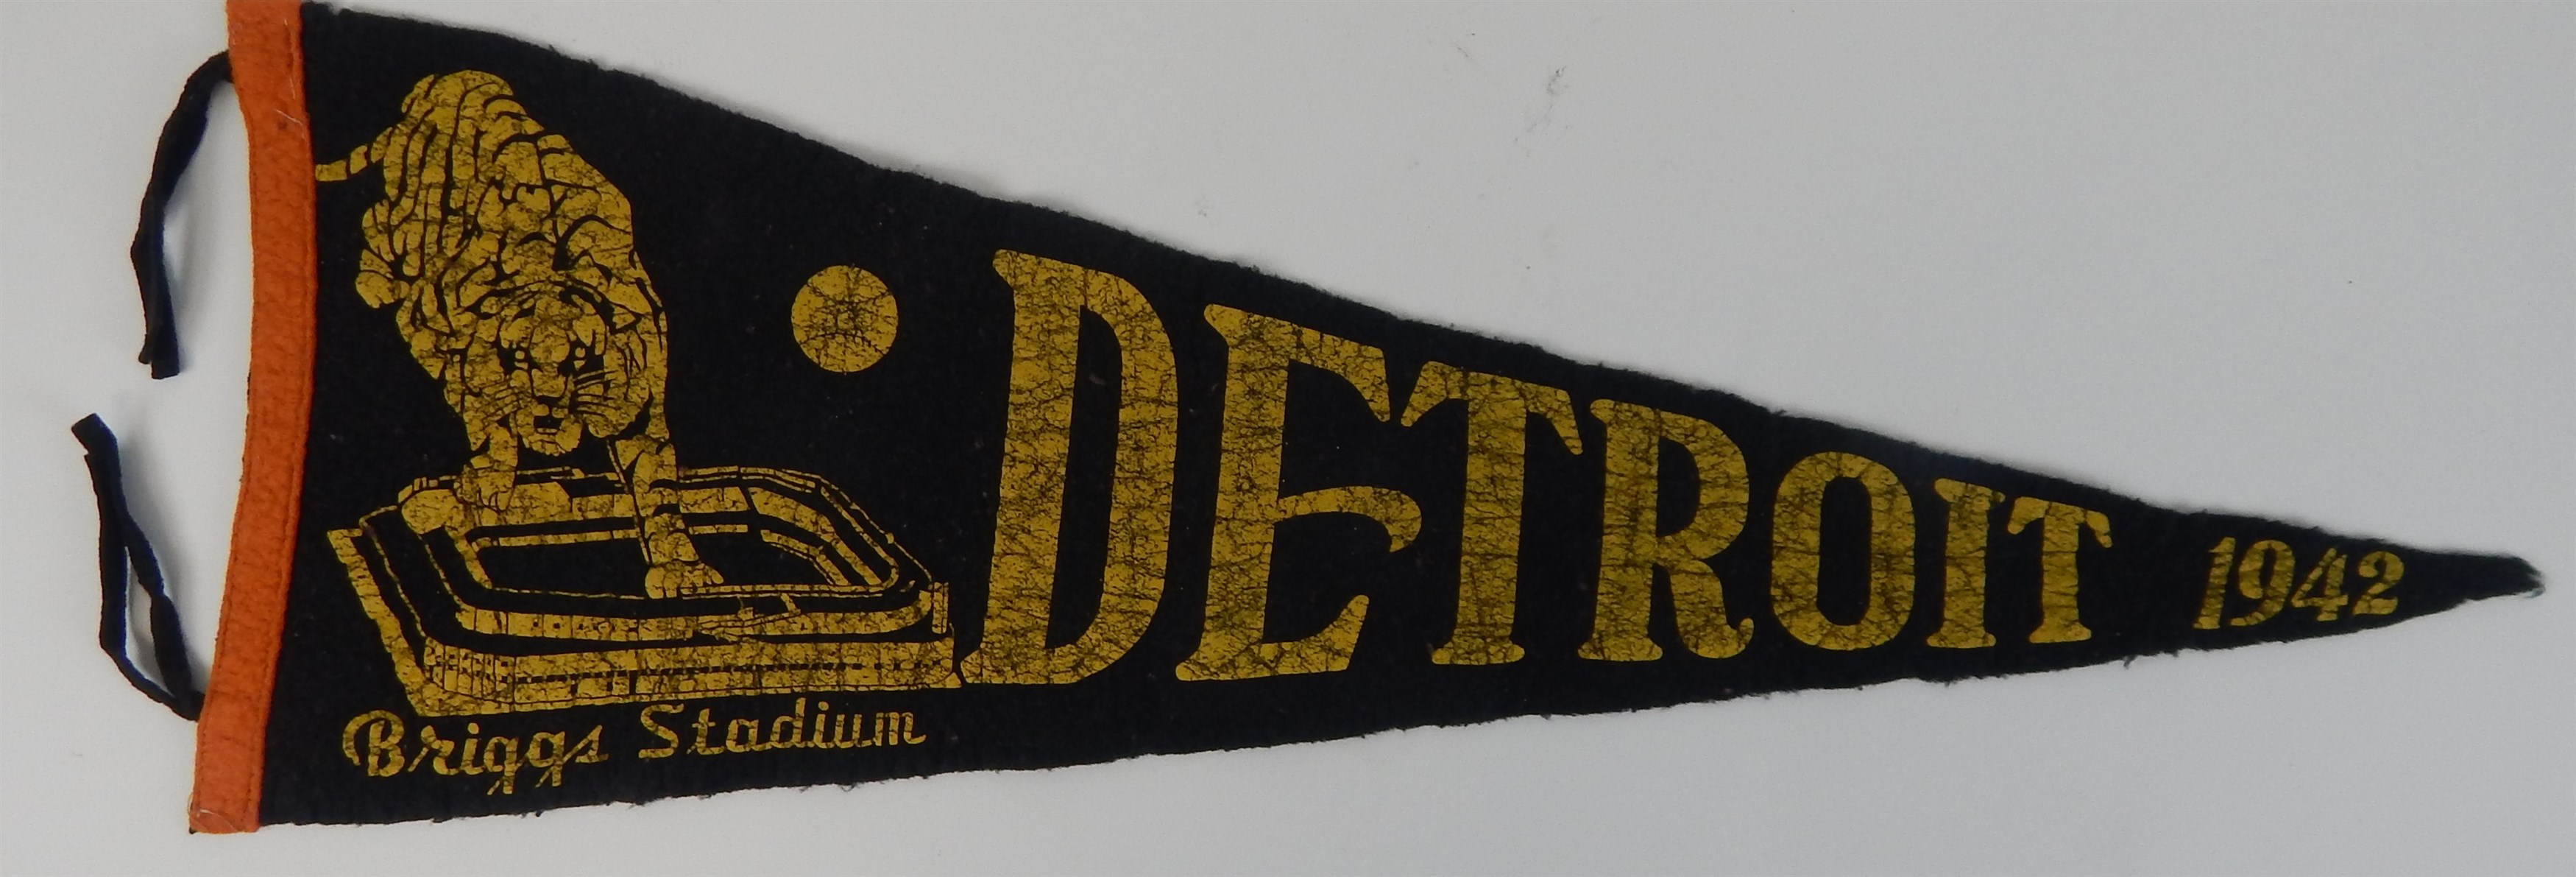 Baseball Memorabilia - Very Rare 1942 Detroit Tigers Dated Pennant